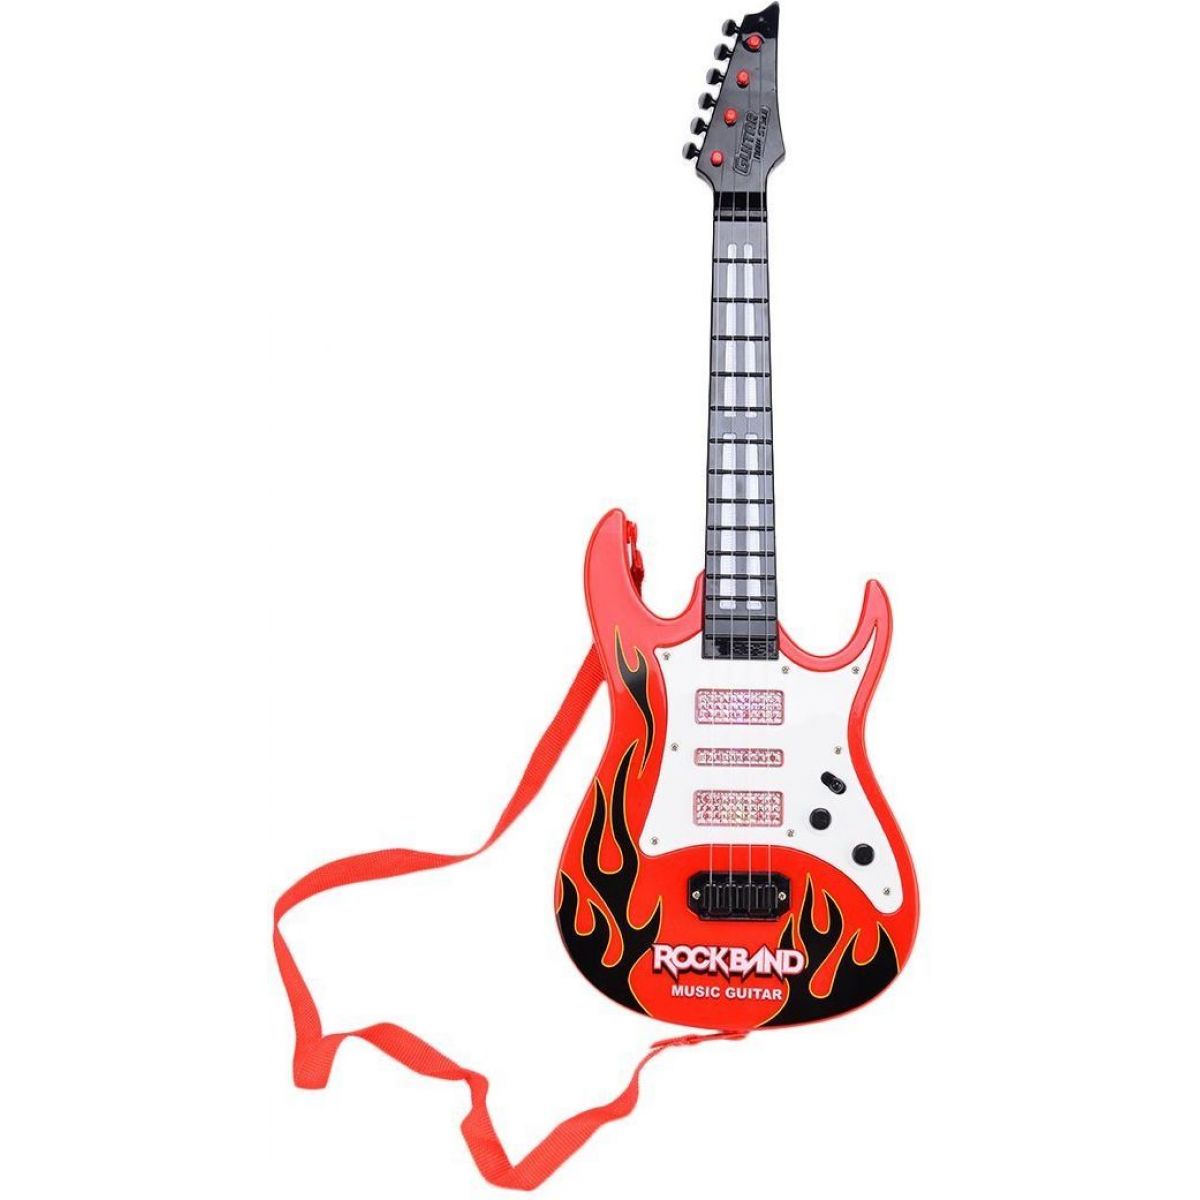 Teddies Kytara plastová 54 cm na baterie se zvuky a světly